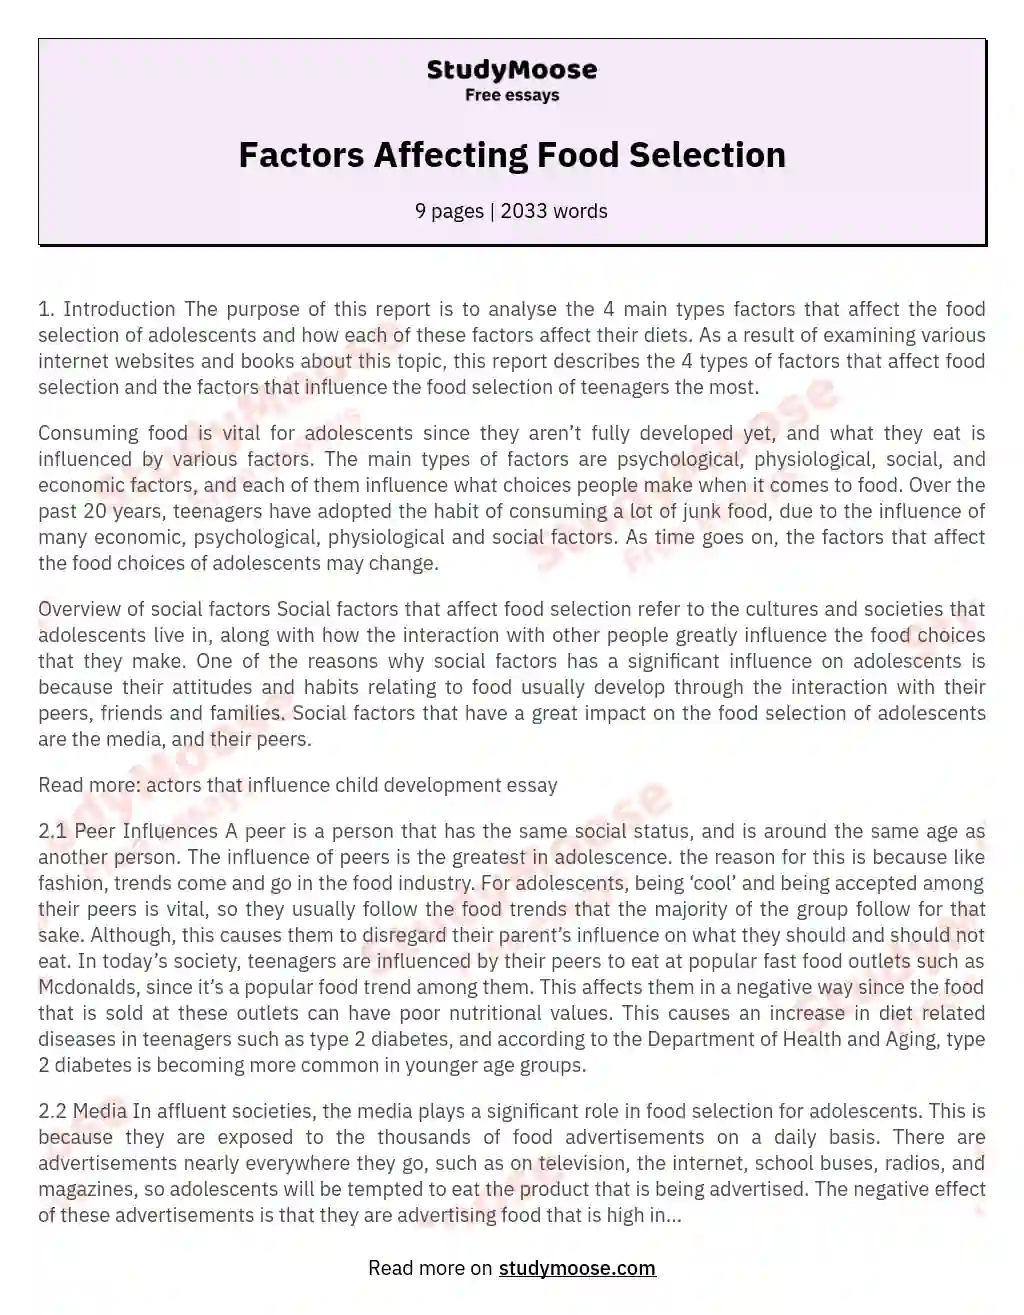 Factors Affecting Food Selection essay